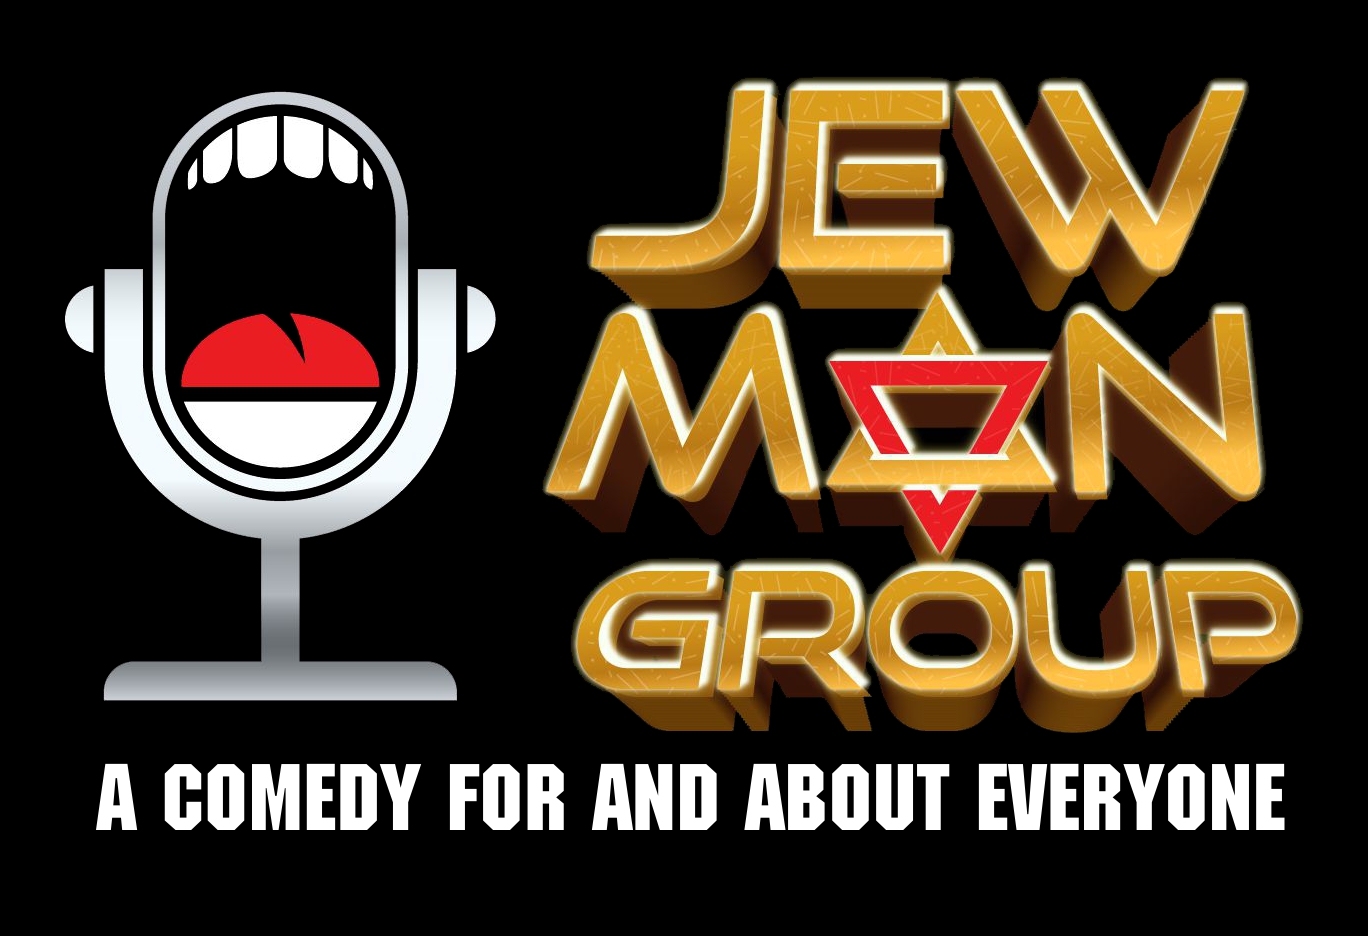 Jew Man Group new tag line